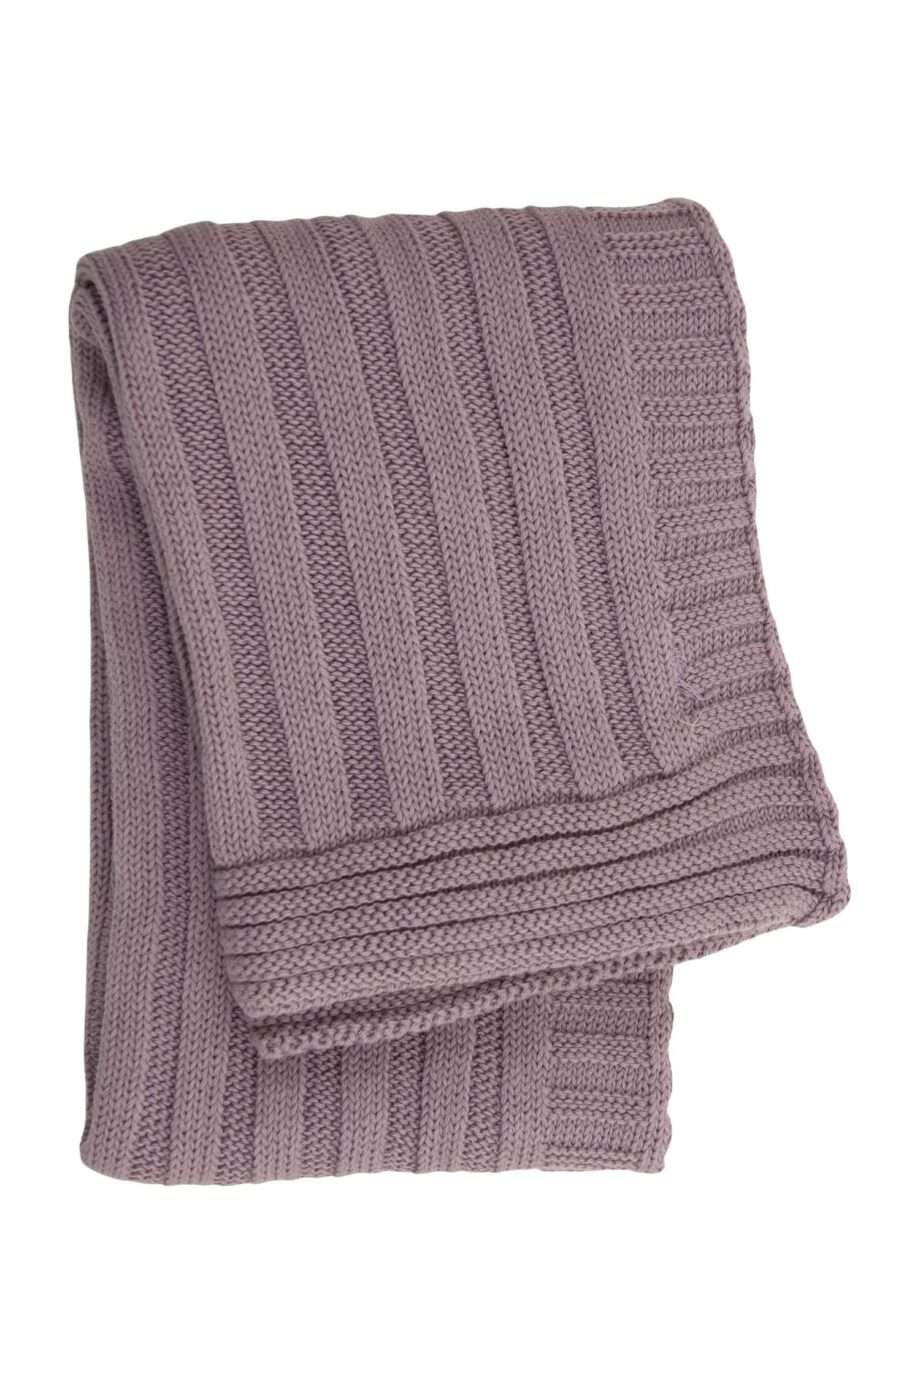 ribs violet knitted cotton little blanket medium